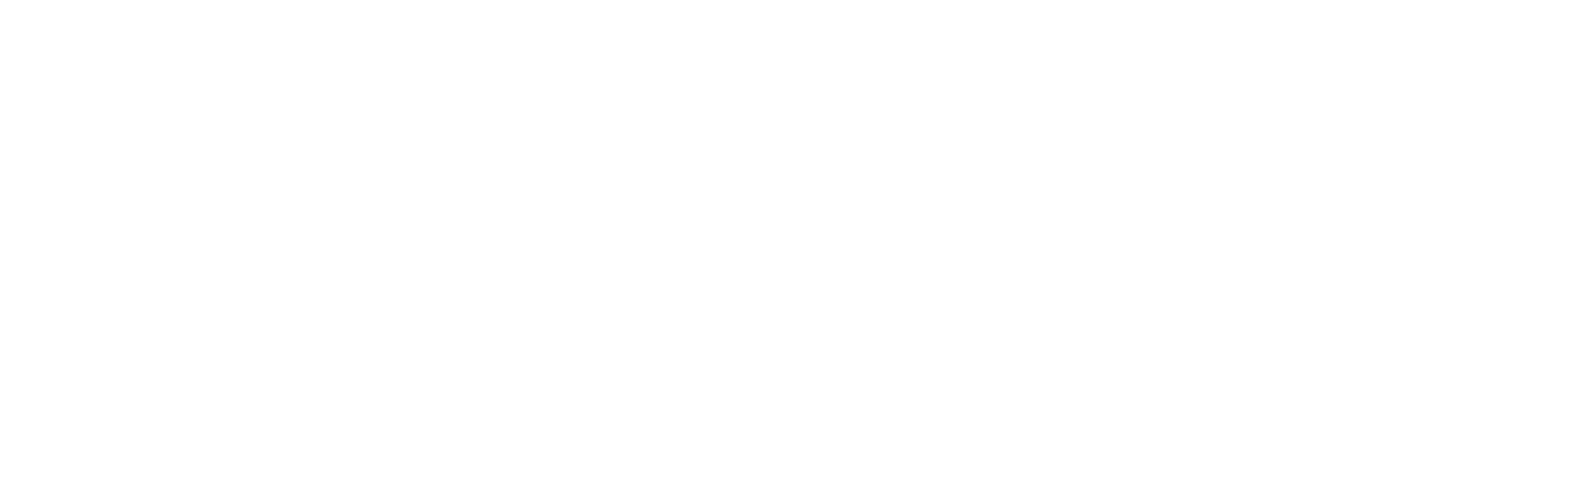 Olam logo large for dark backgrounds (transparent PNG)